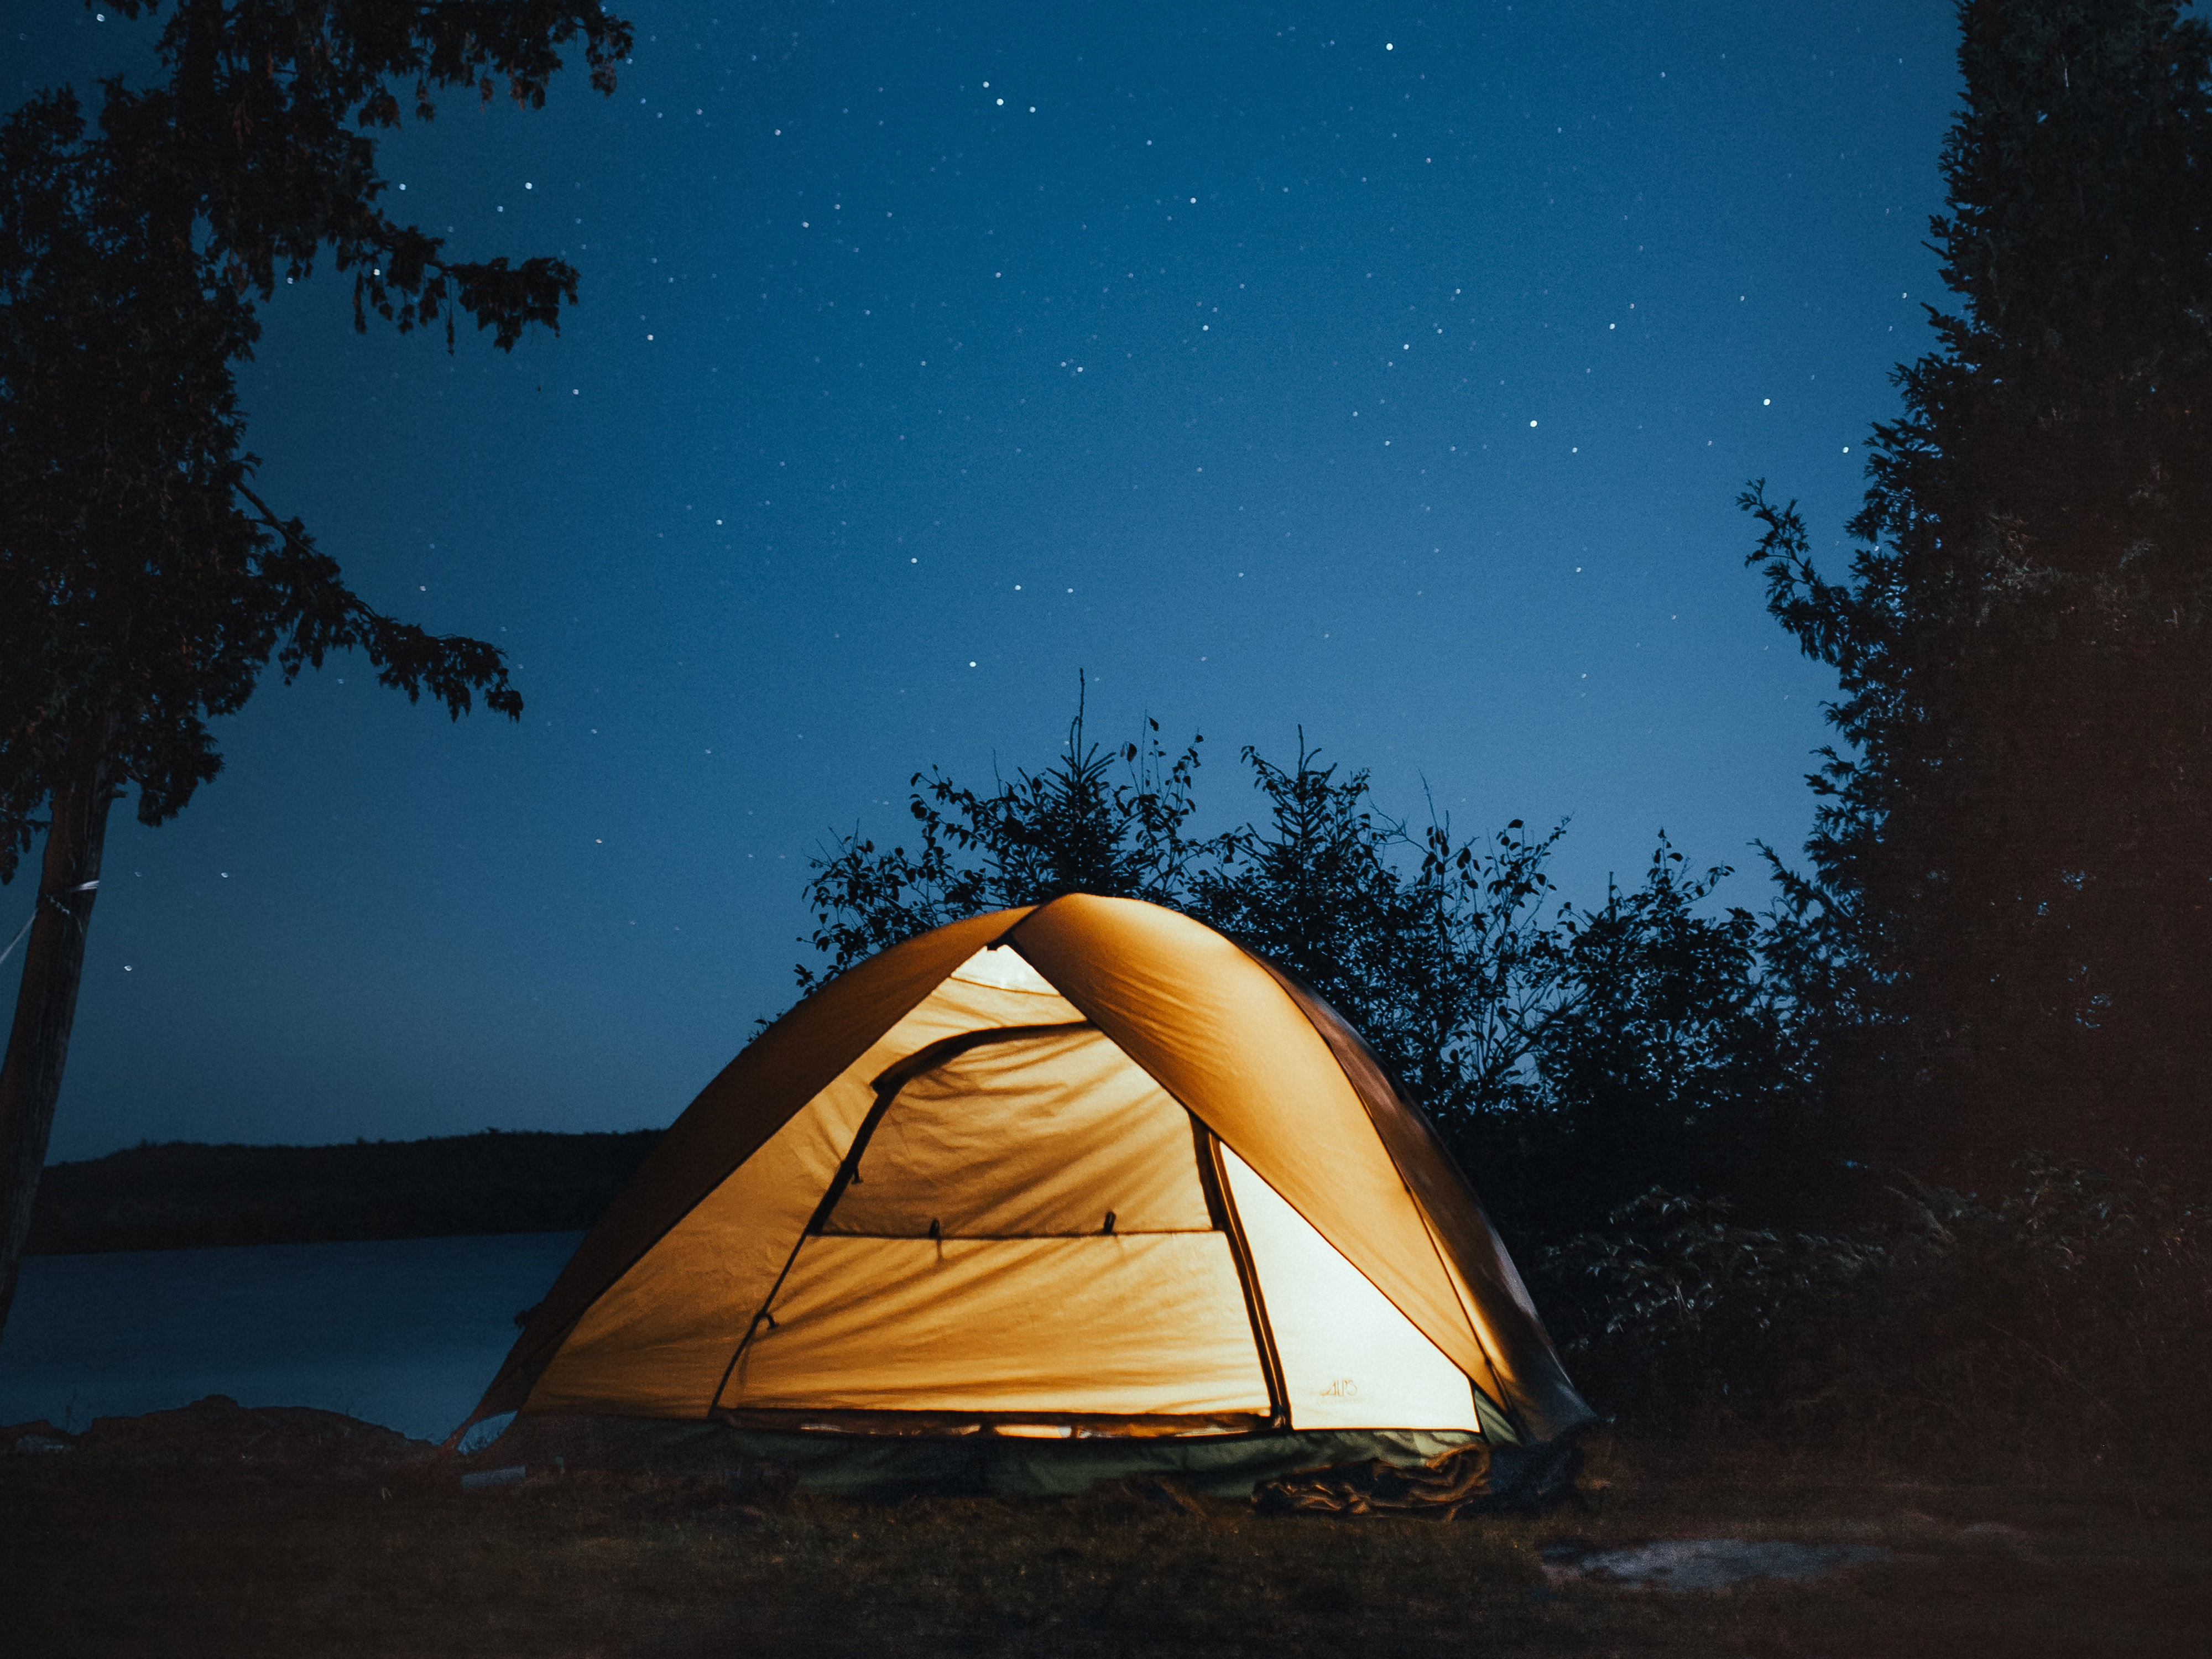 Camping mit Zelt